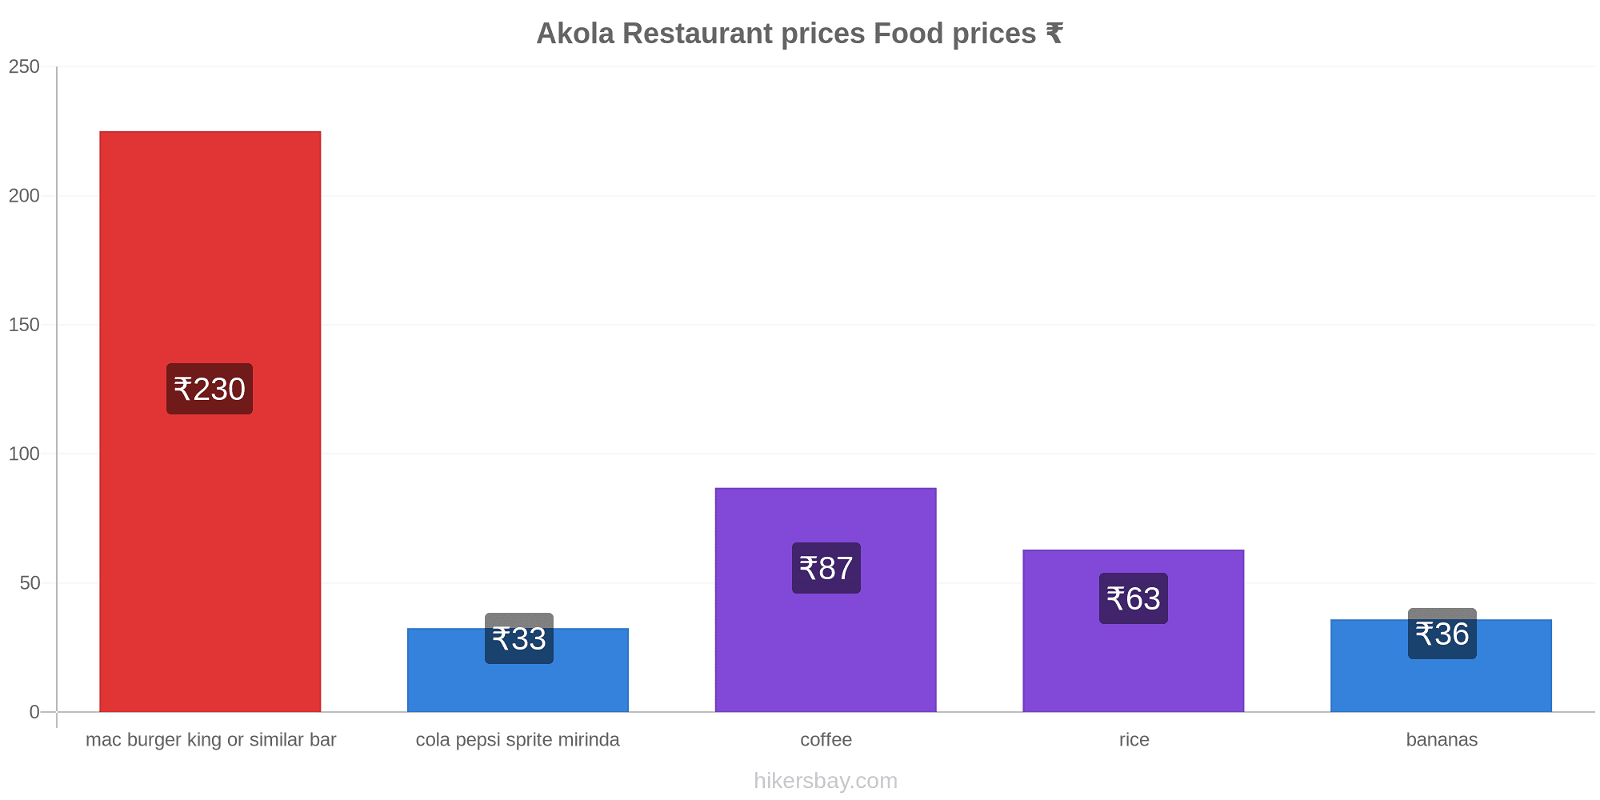 Akola price changes hikersbay.com